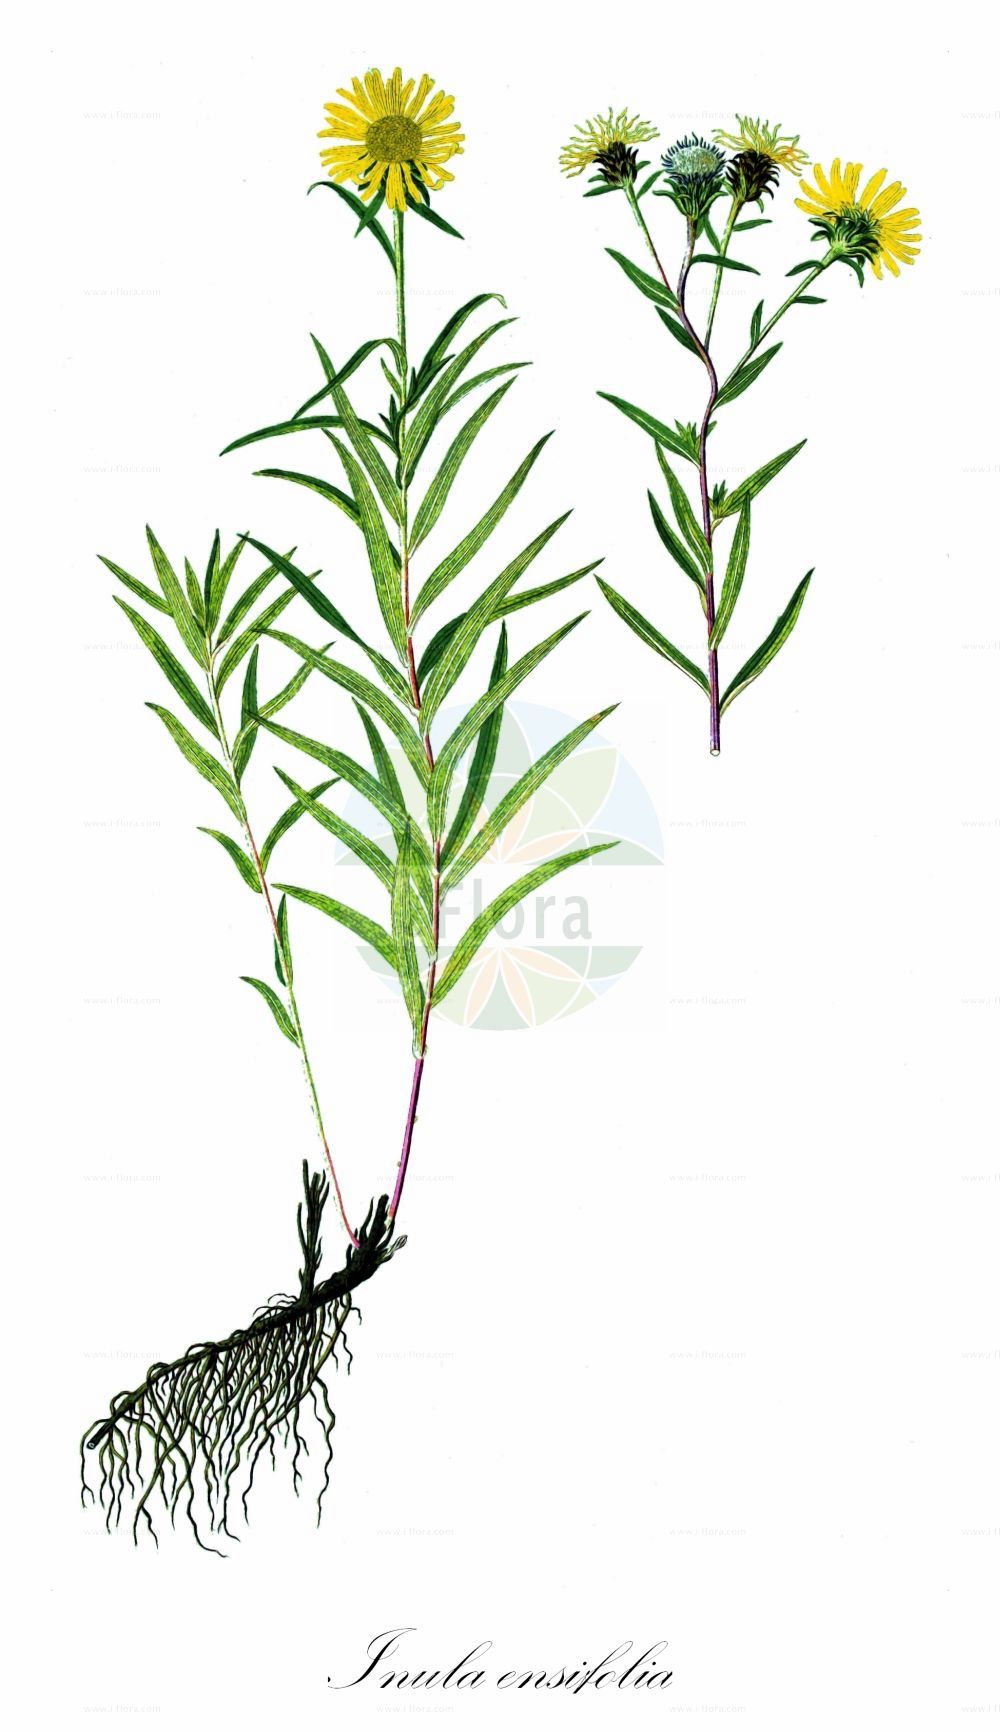 Historische Abbildung von Inula ensifolia (Schwert-Alant - Narrow-leaved Inula). Das Bild zeigt Blatt, Bluete, Frucht und Same. ---- Historical Drawing of Inula ensifolia (Schwert-Alant - Narrow-leaved Inula). The image is showing leaf, flower, fruit and seed.(Inula ensifolia,Schwert-Alant,Narrow-leaved Inula,Inula ensifolia,Schwert-Alant,Narrow-leaved Inula,Inula,Alant,Yellowhead,Asteraceae,Korbblütengewächse,Daisy family,Blatt,Bluete,Frucht,Same,leaf,flower,fruit,seed)